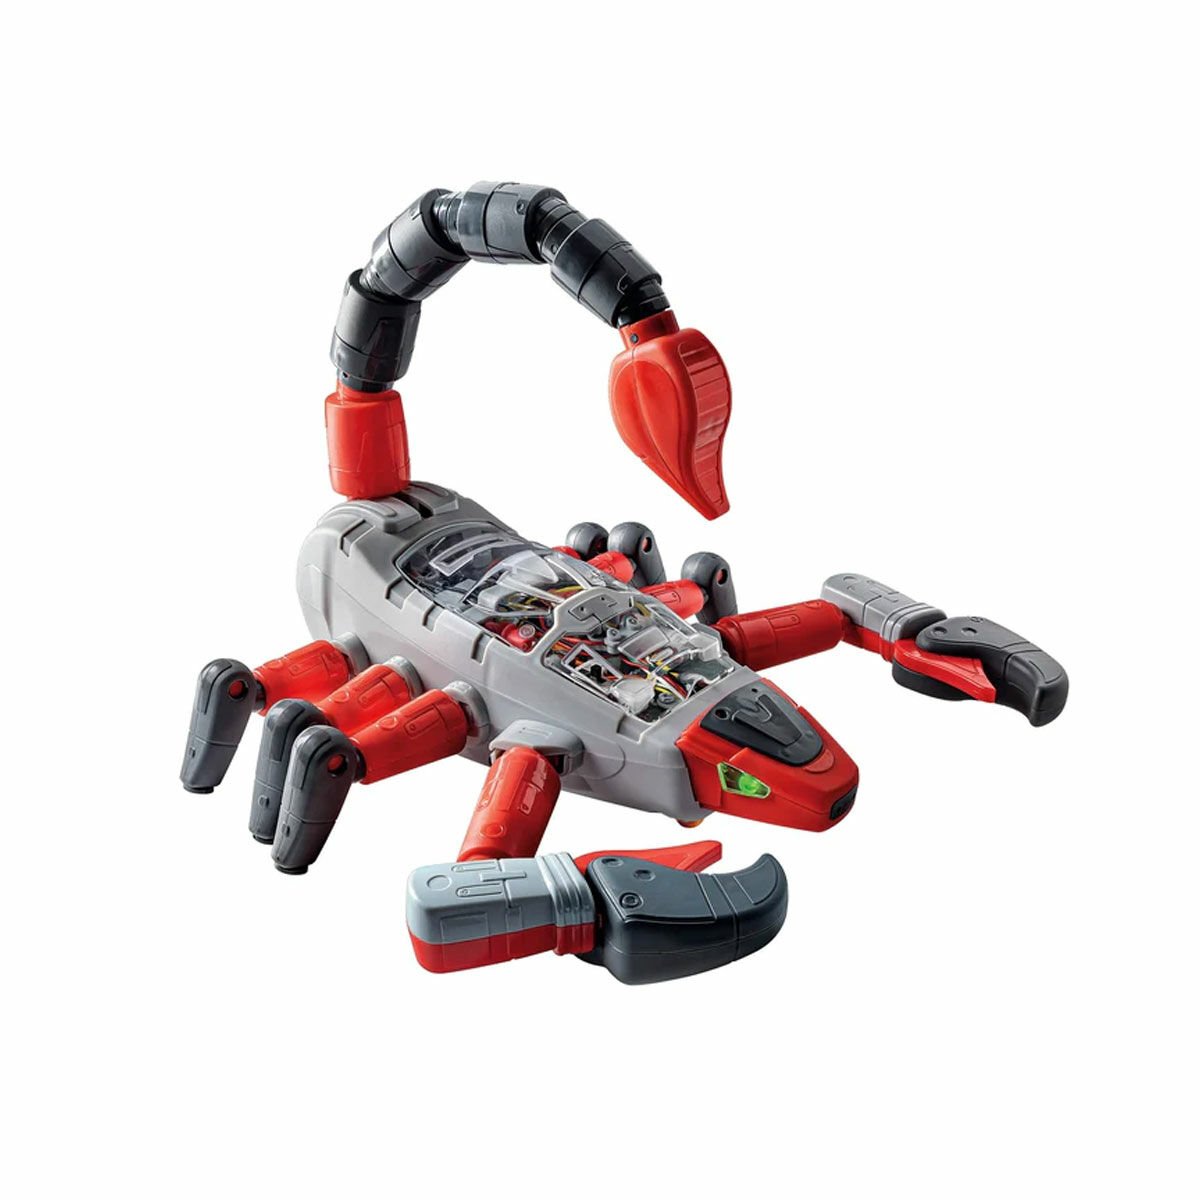 64331 Scorpion Robot - Robotik Laboratuvarı +8 yaş